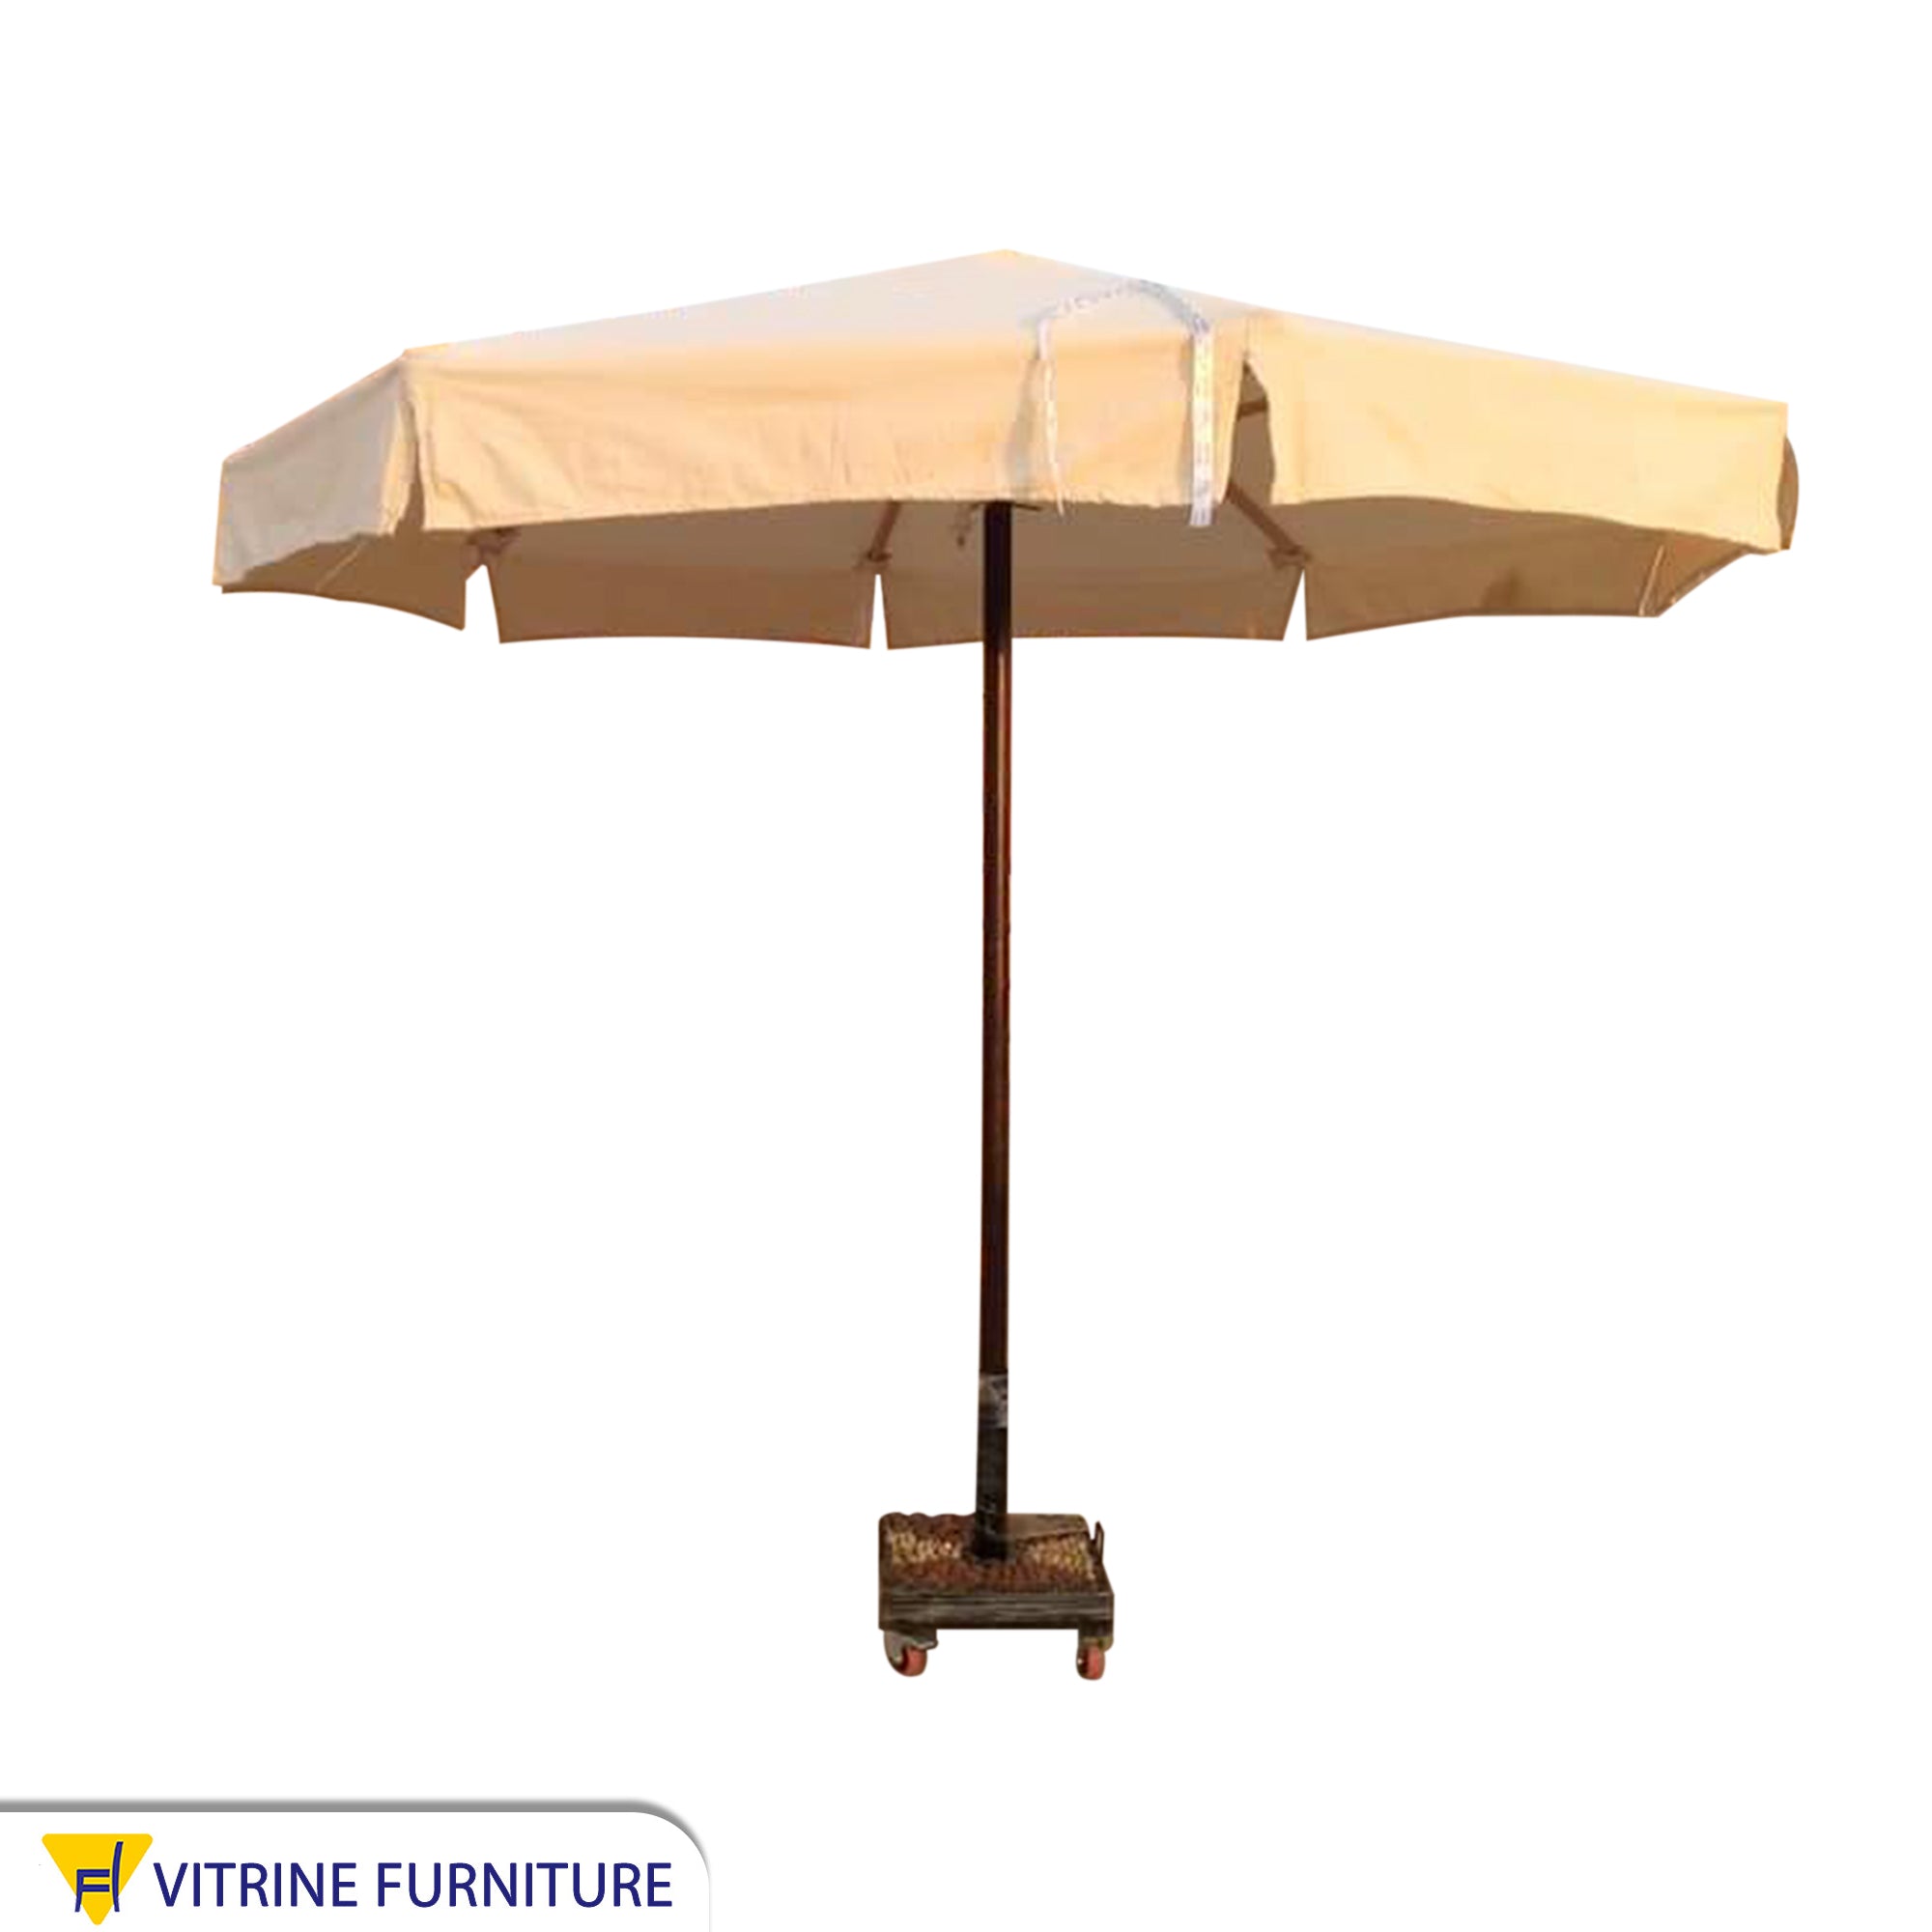 Large umbrella for summer resorts